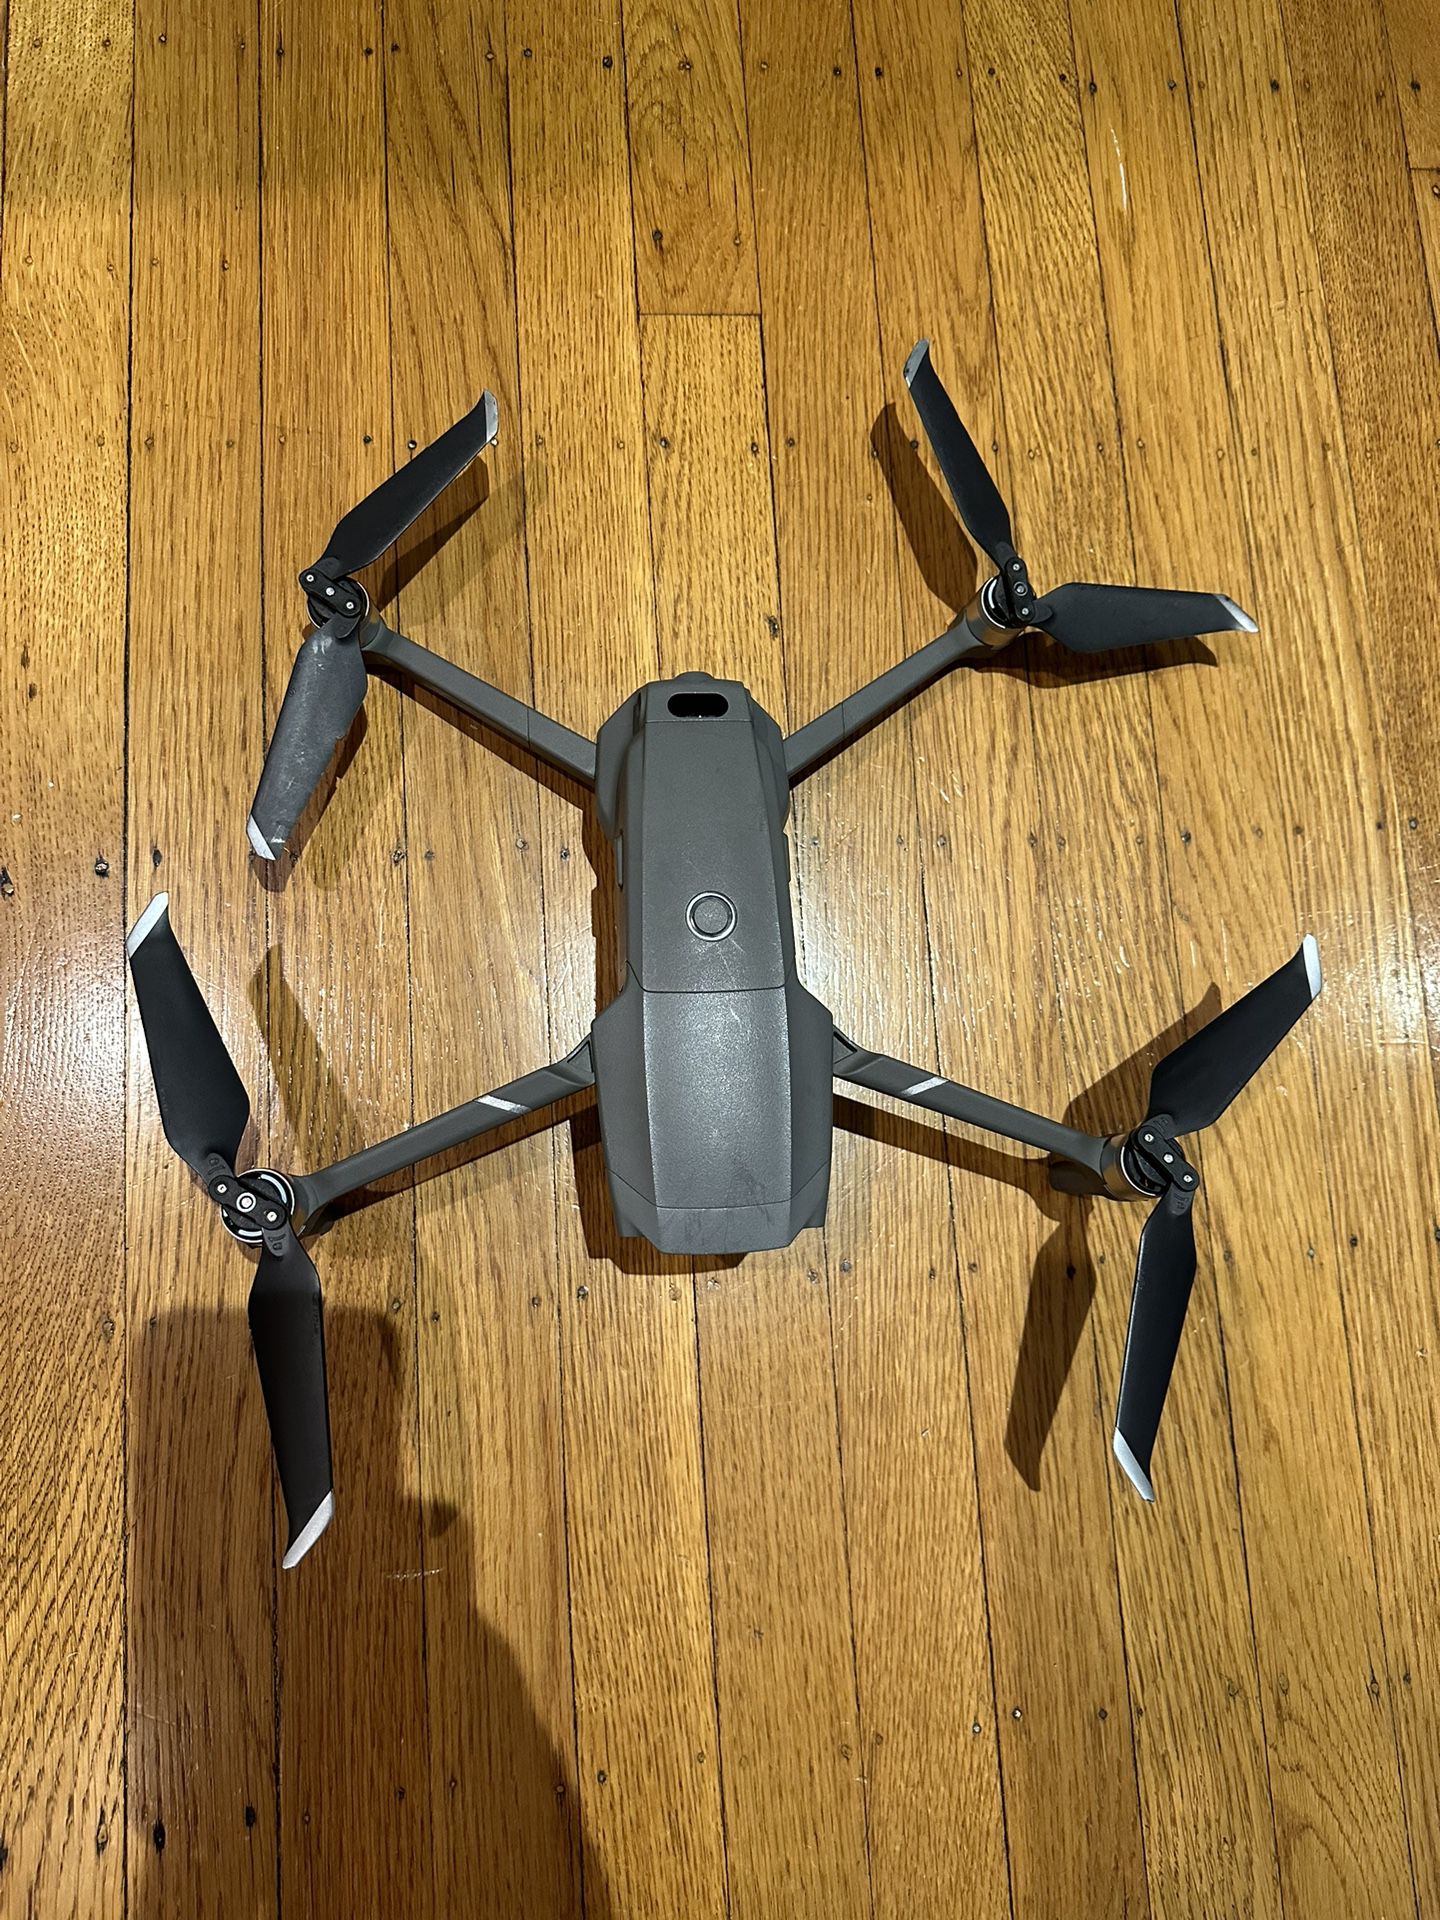 DJI Mavic Pro 2 Drone